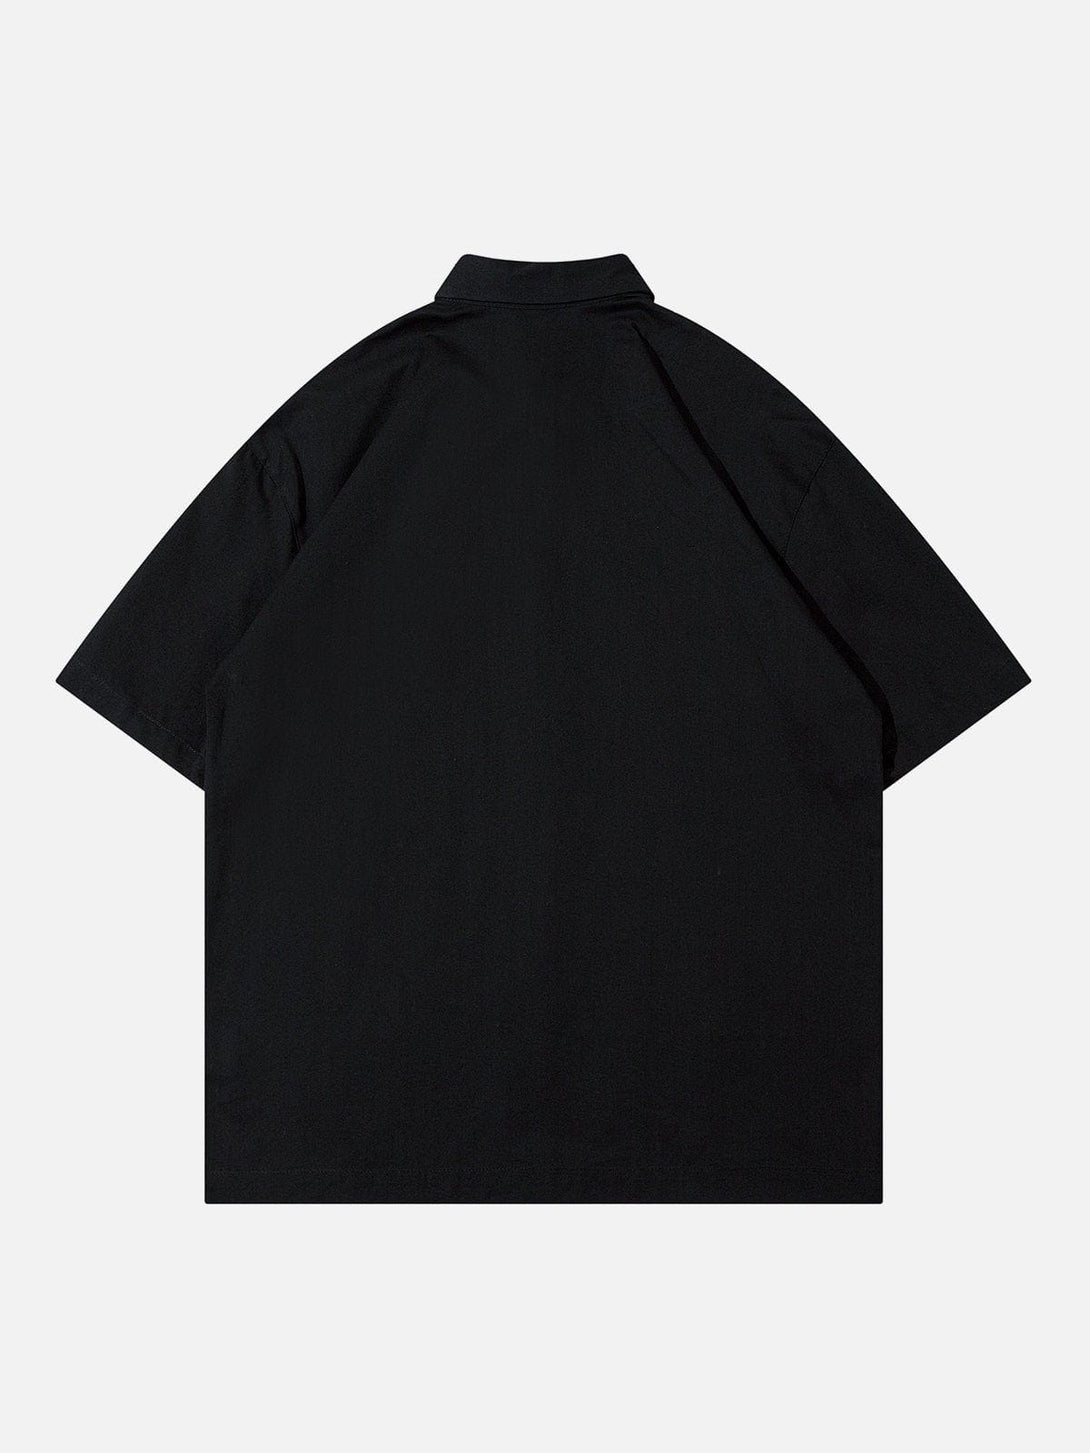 AlanBalen® - Flame Dart Graphic Short Sleeve Shirts AlanBalen